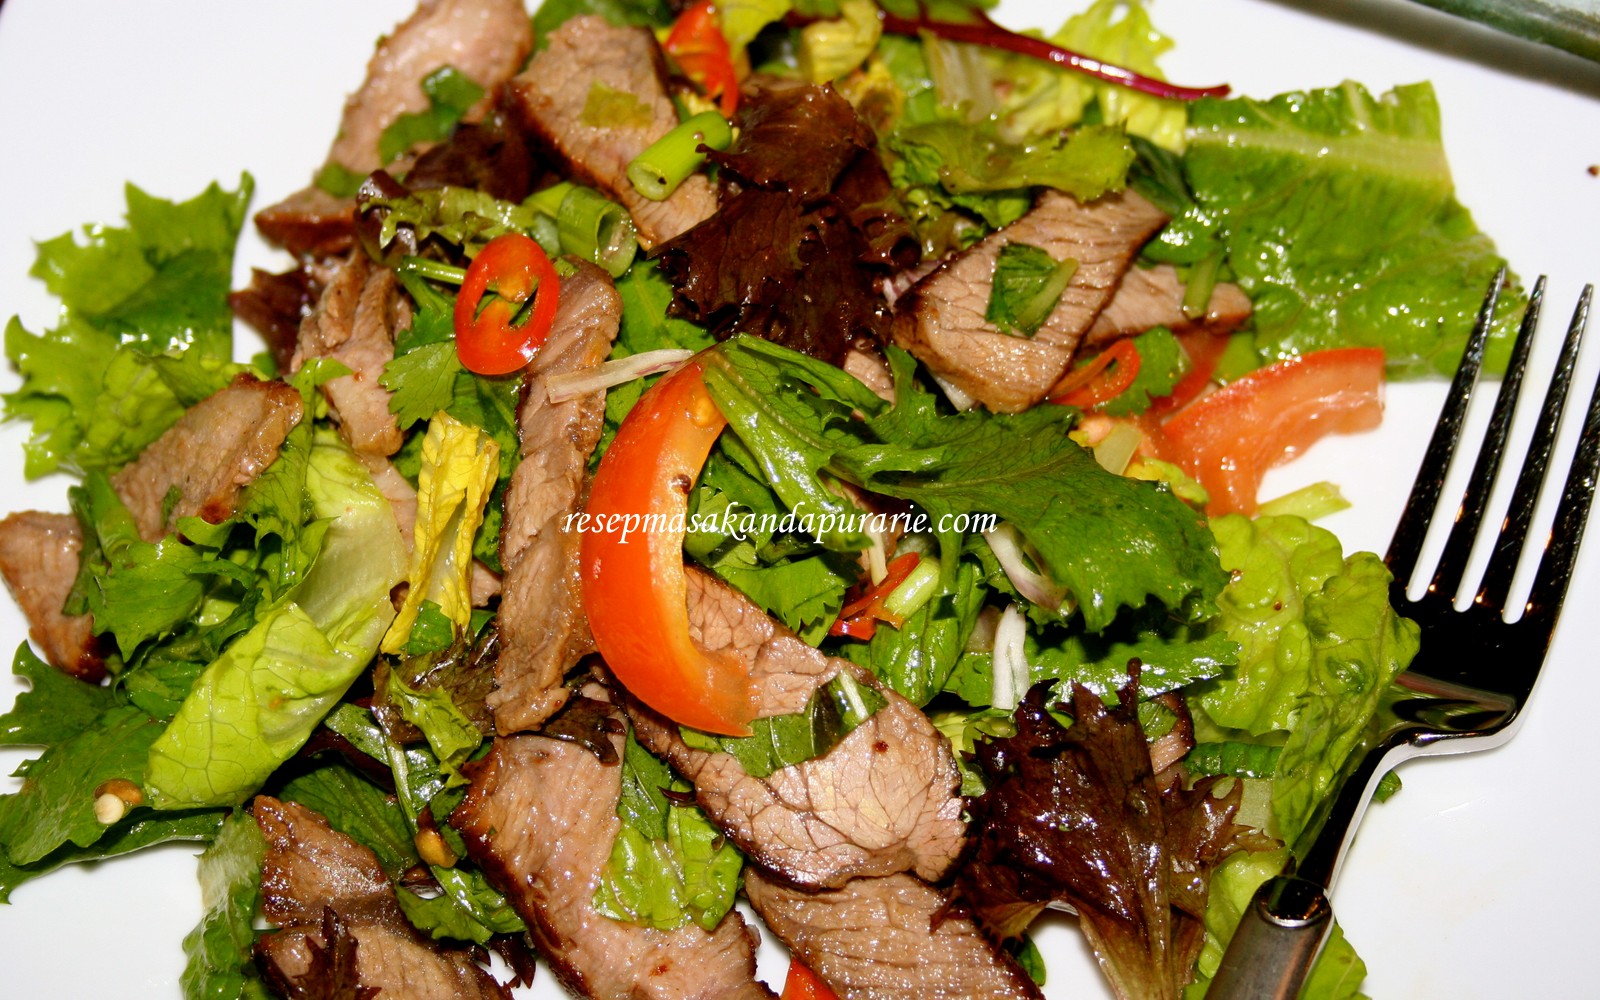 Resep Cara Membuat Salad Daging Sapi ala Thailand - Resep 